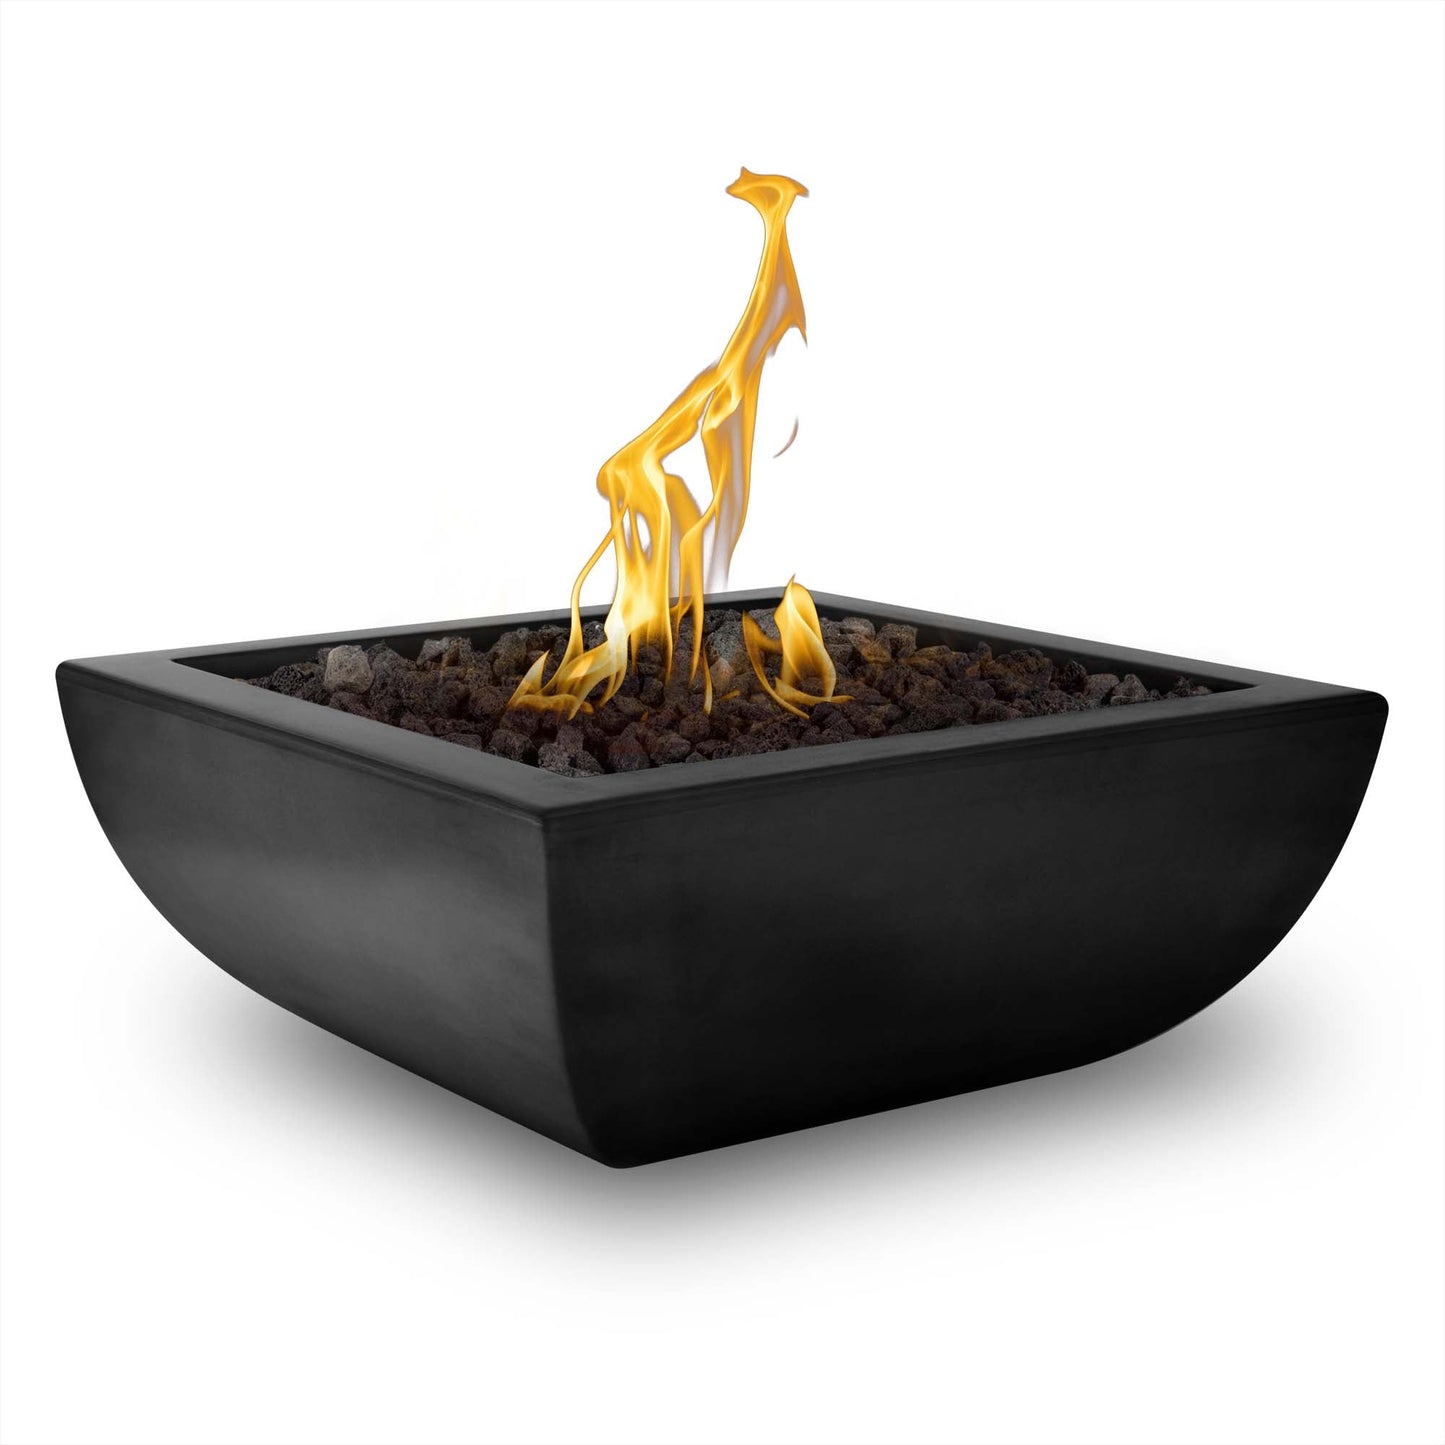 The Outdoor Plus Square Avalon 30" Metallic Bronze GFRC Concrete Liquid Propane Fire Bowl with Match Lit with Flame Sense Ignition